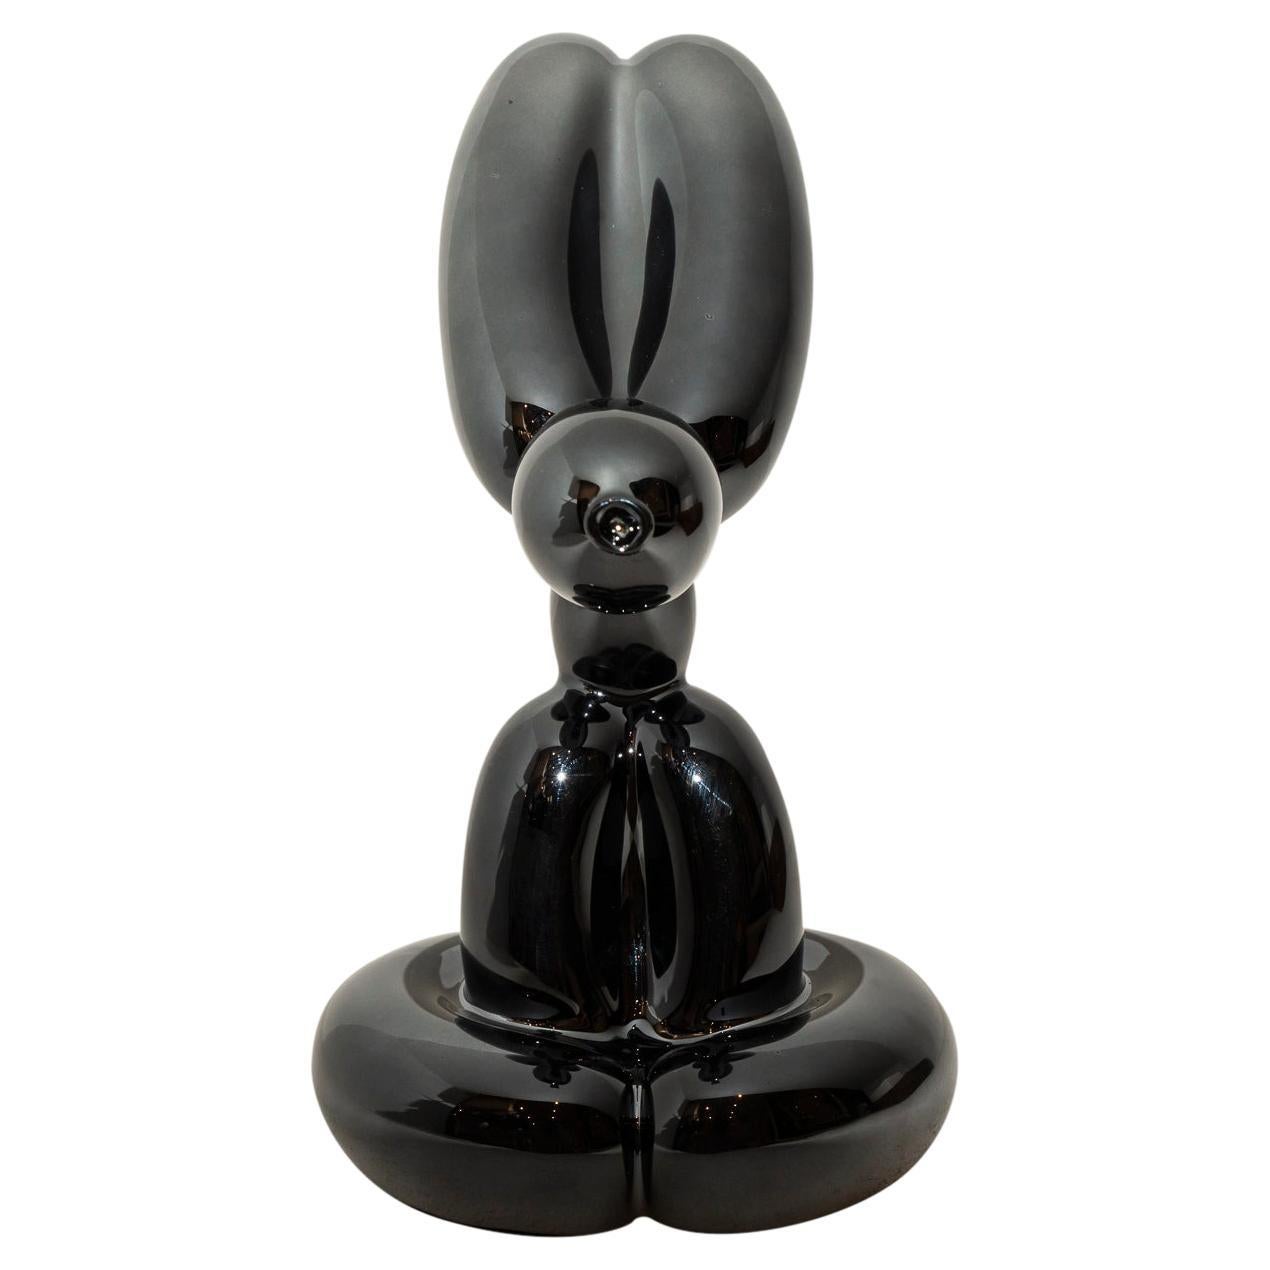 "Balloon Rabbit 'Black'", United States, circa 2010